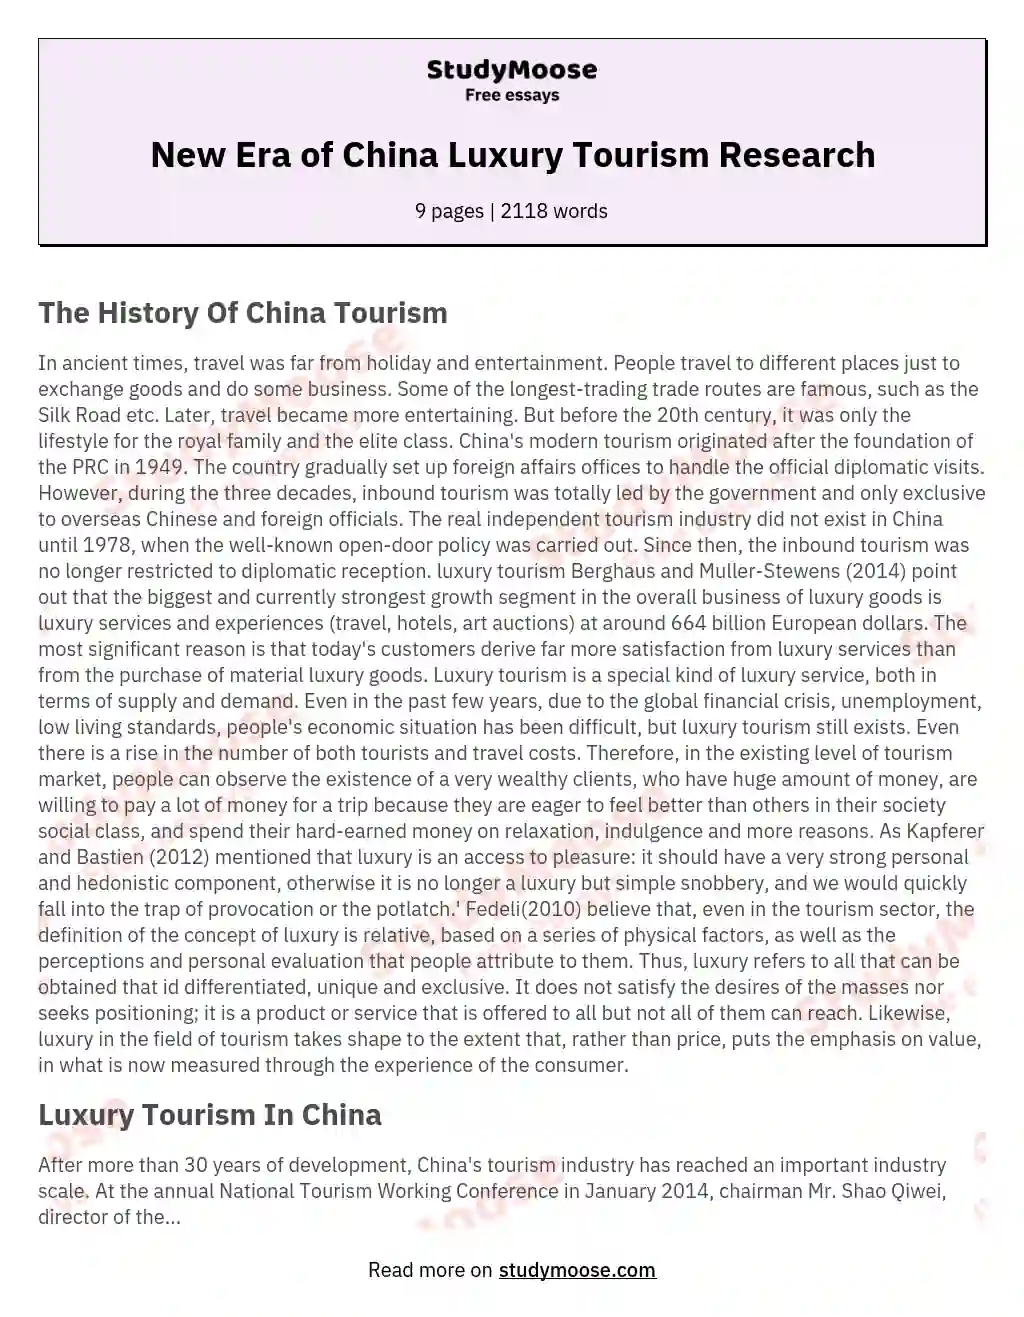 New Era of China Luxury Tourism Research essay